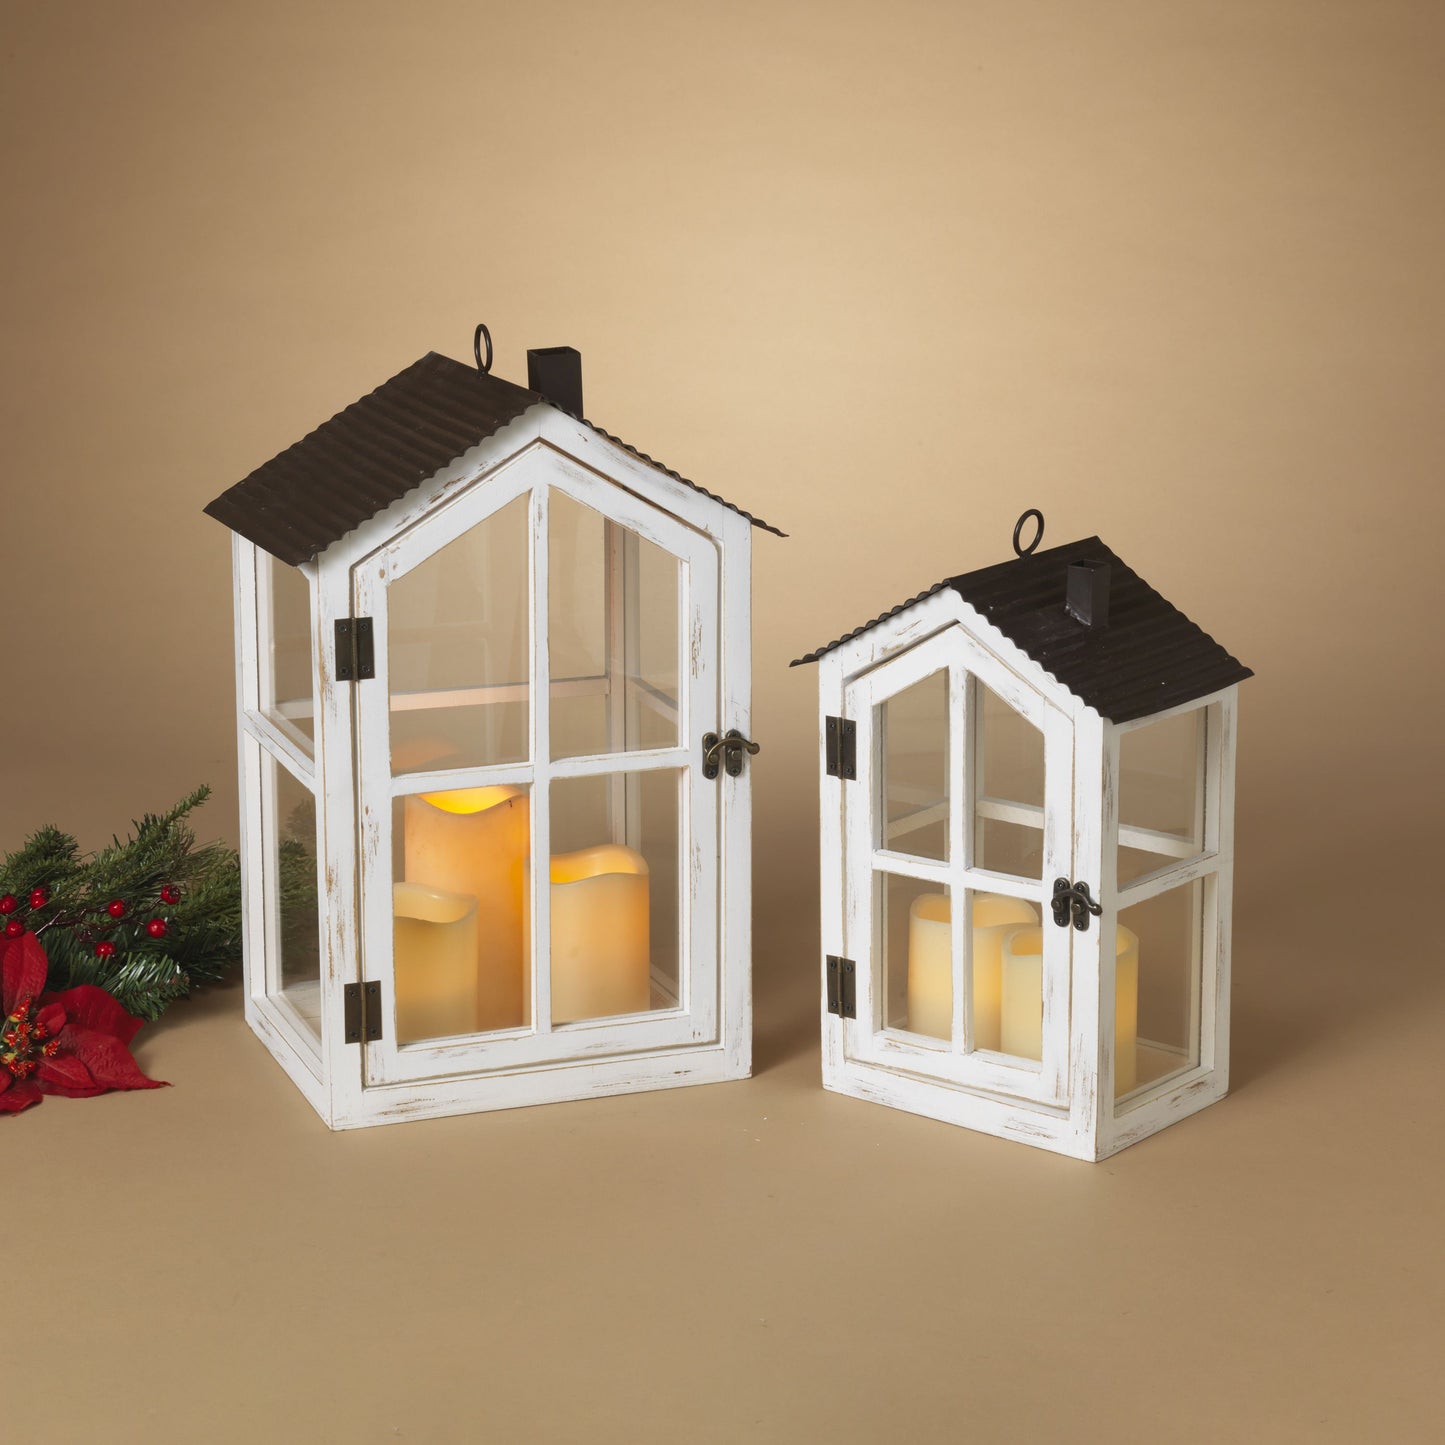 Gerson Company Set of 2 Nesting Wood & Glass Holiday Lanterns